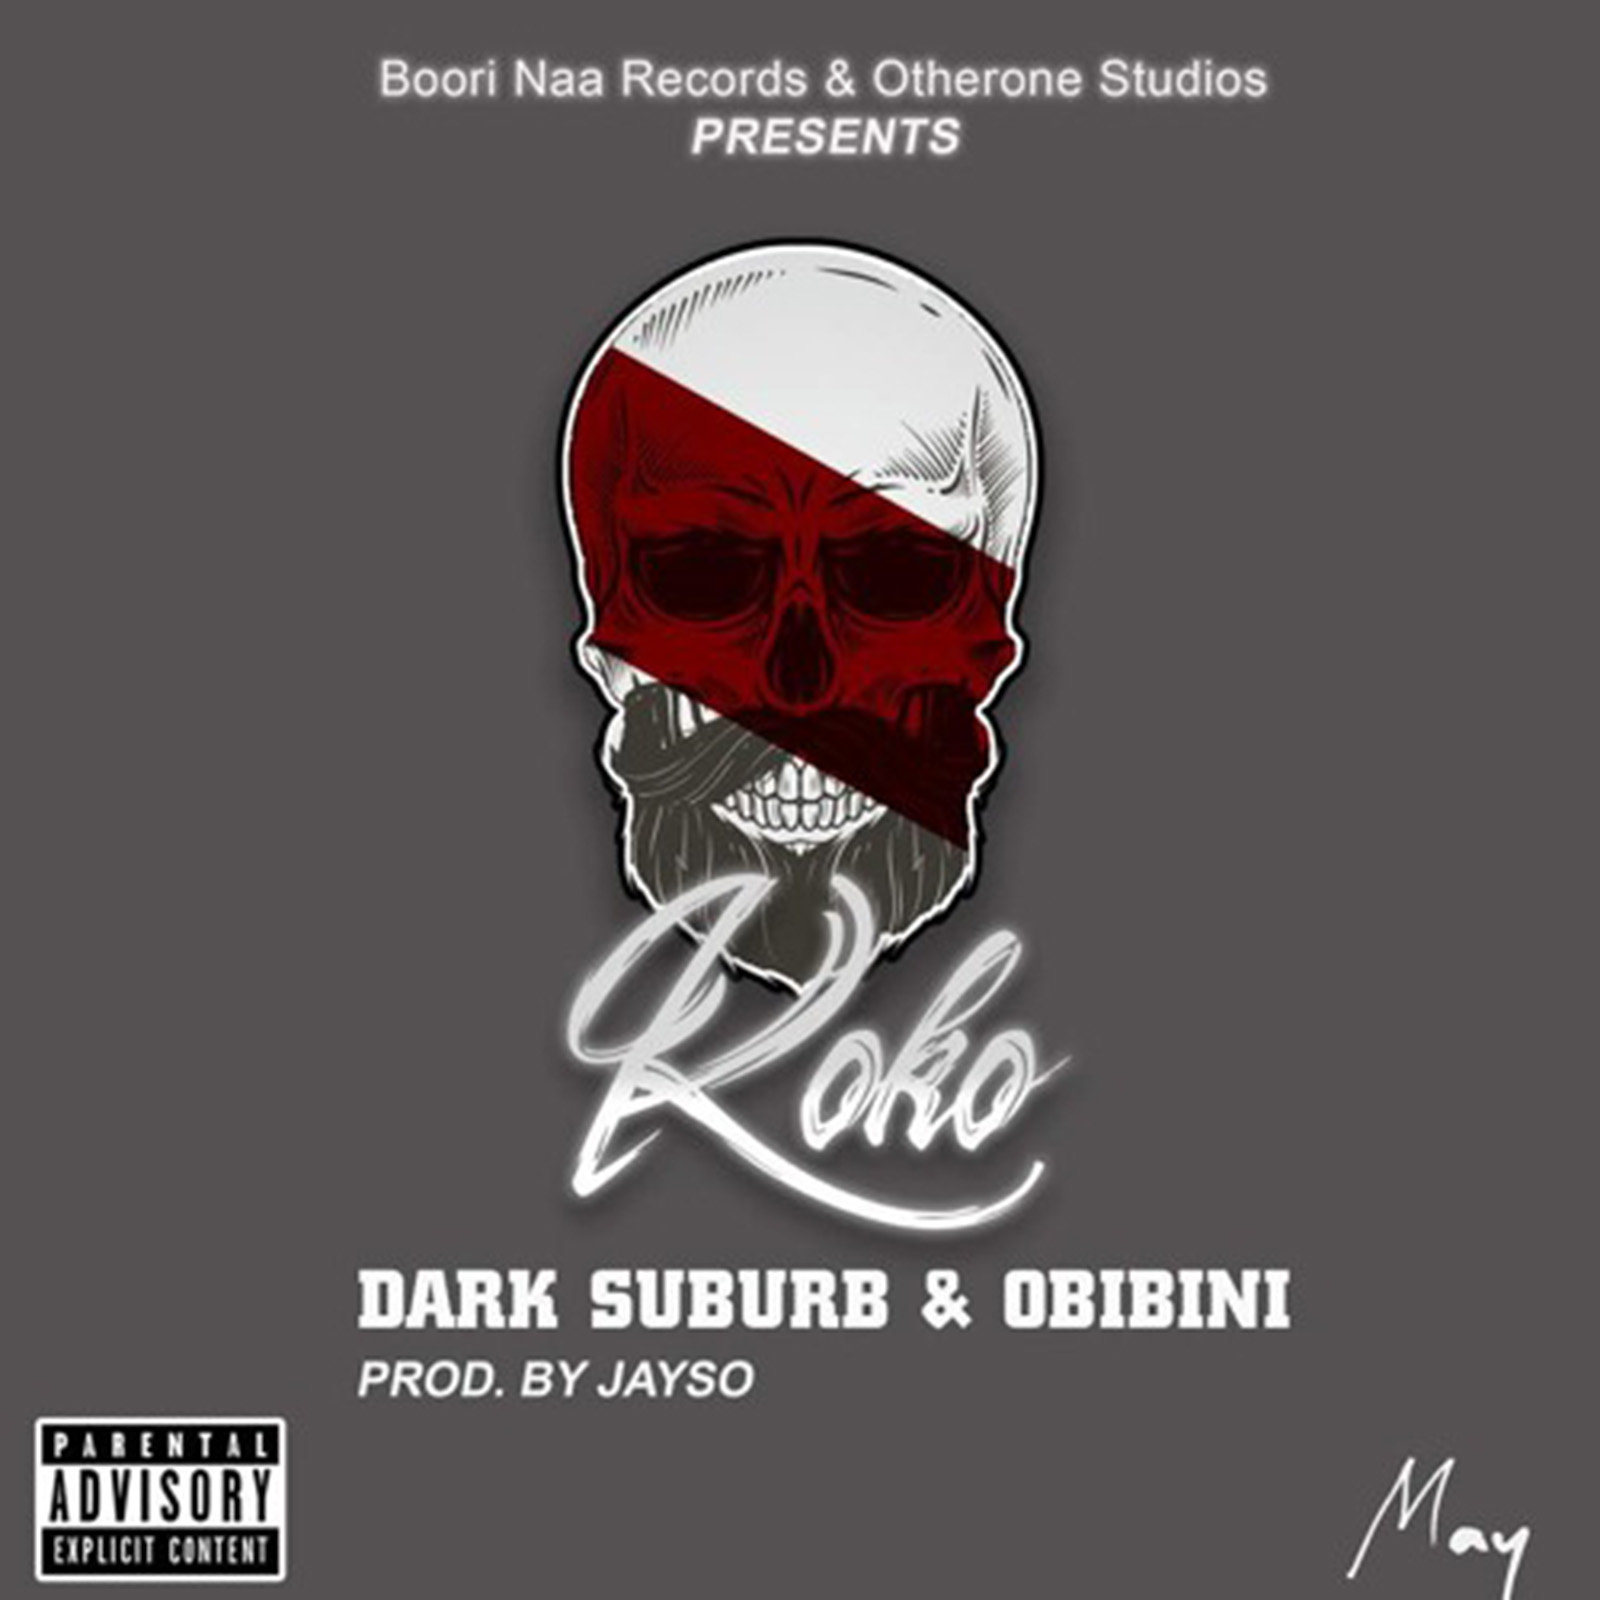 Koko by Dark Suburb & Obibini